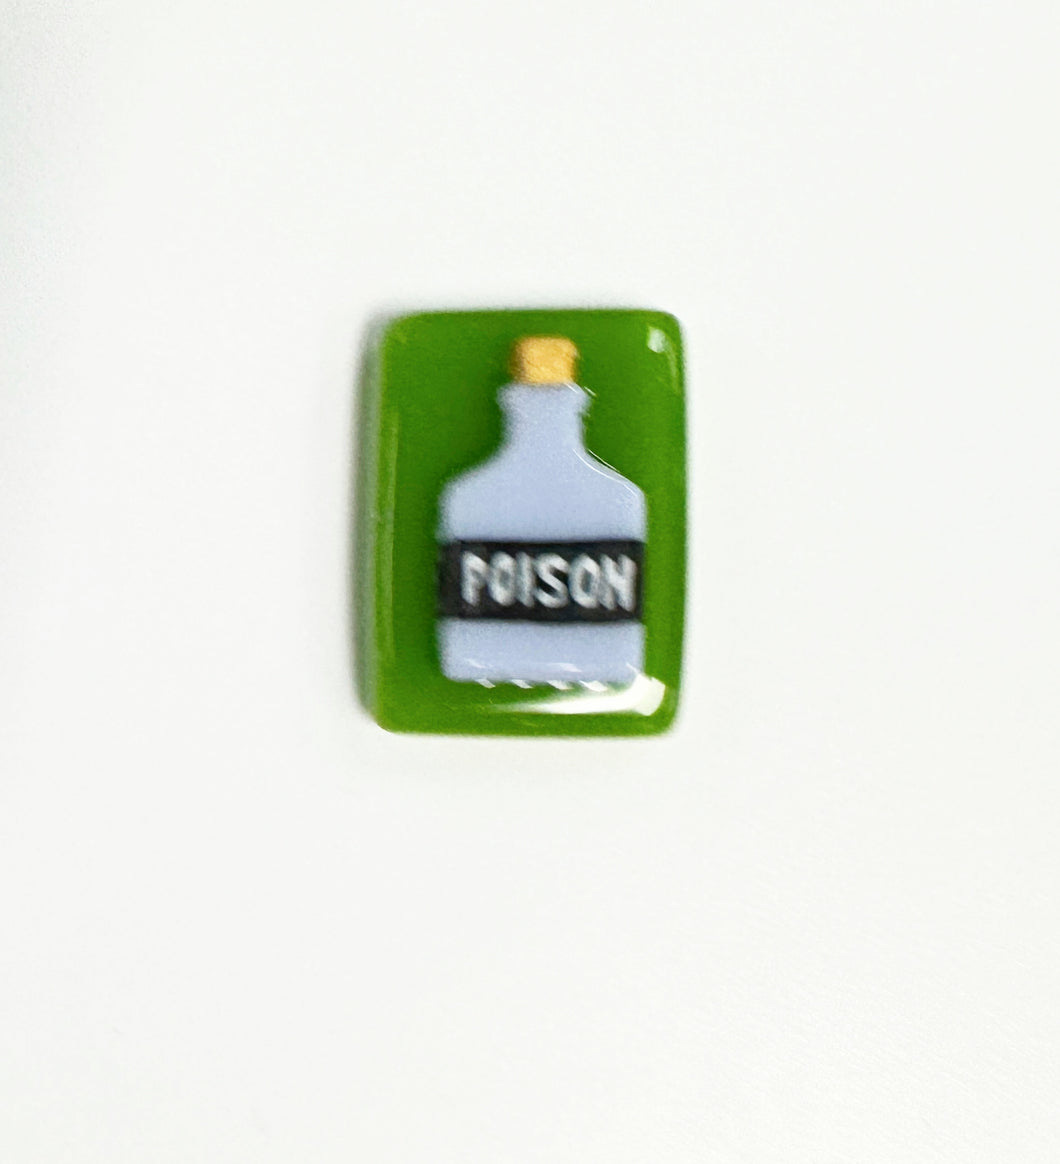 Poison Bottle Fused Glass Needleminder, White on Green